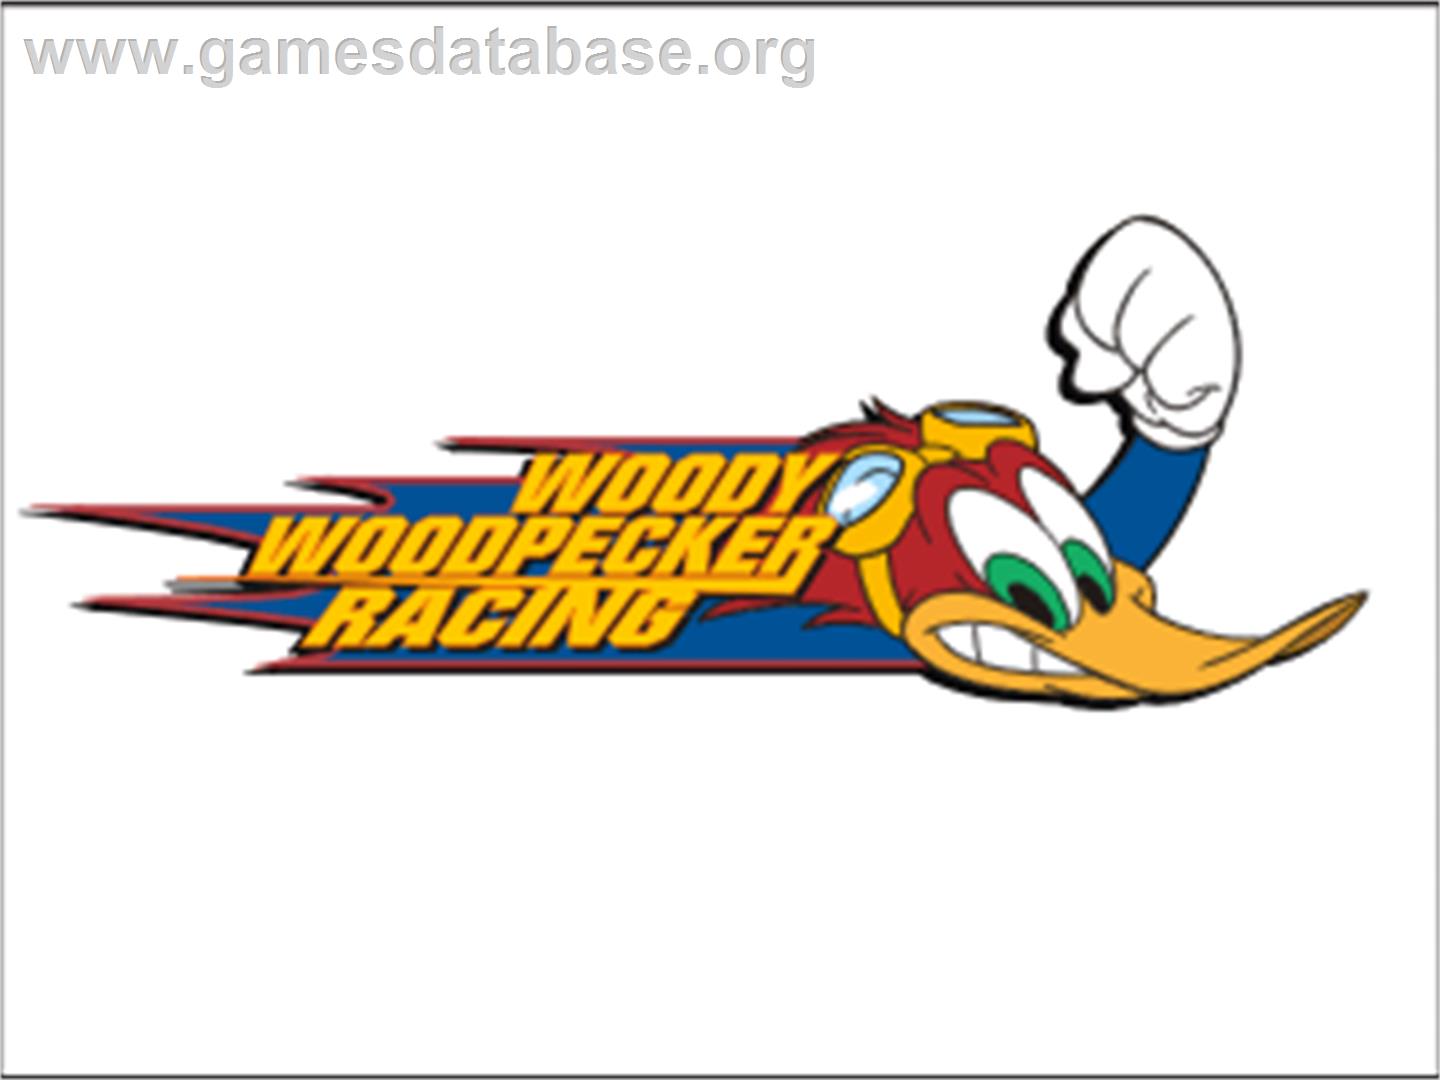 Woody Woodpecker Racing - Sony Playstation - Artwork - Title Screen